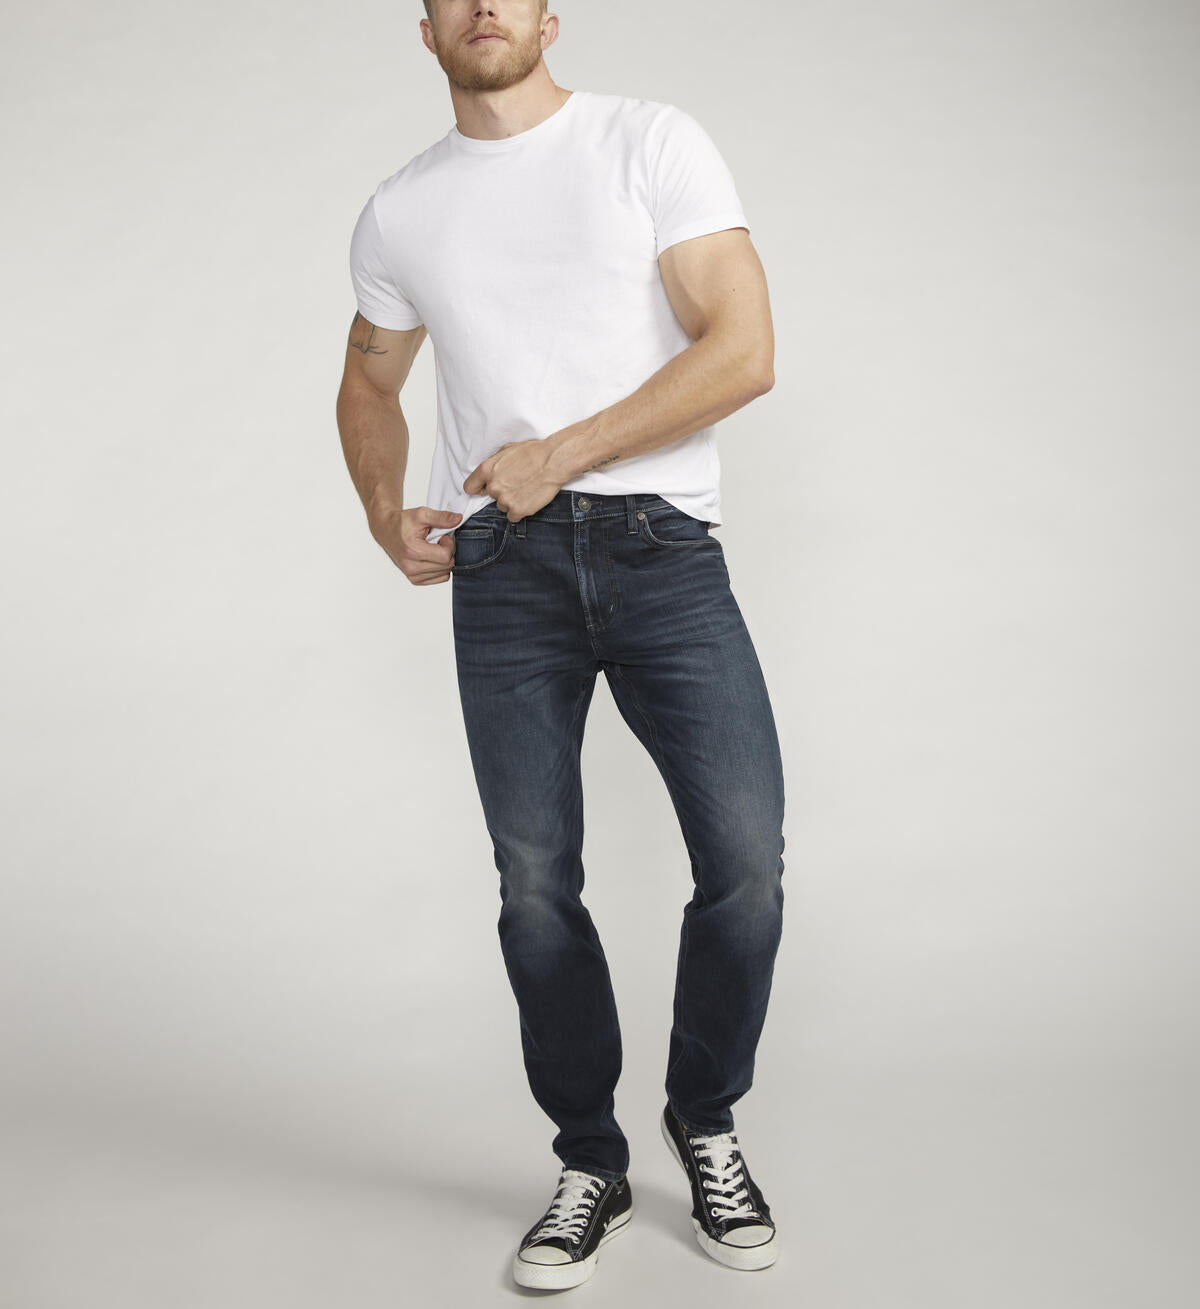 Silver Jeans - Taavi Skinny Fit Jeans 32"